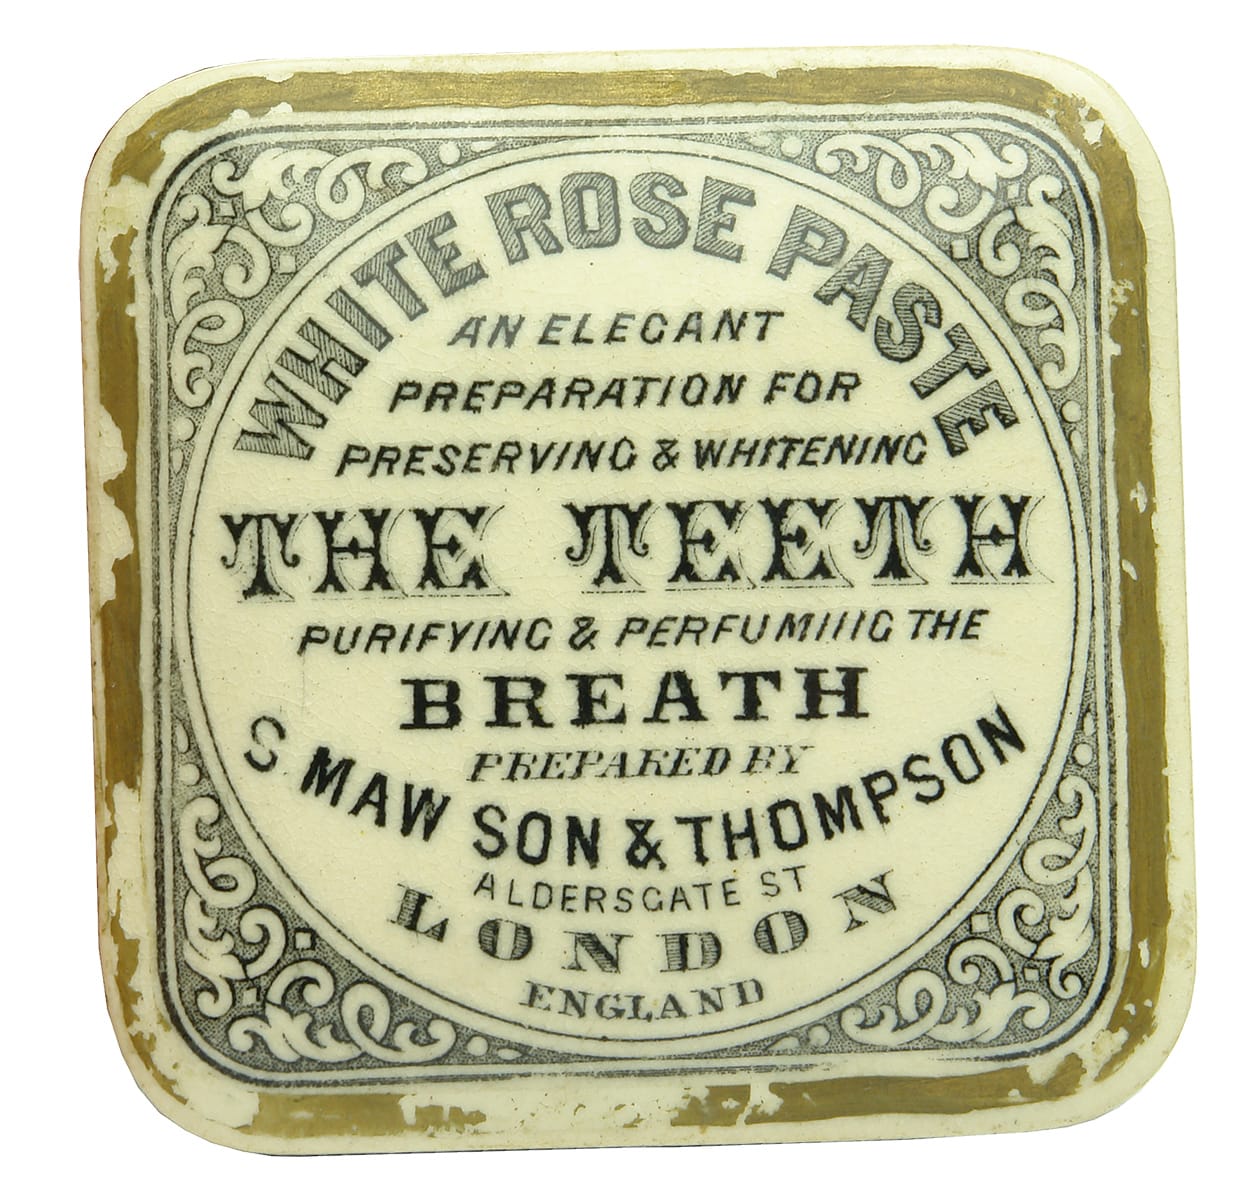 Maw son Thompson London White Rose Paste Pot Lid